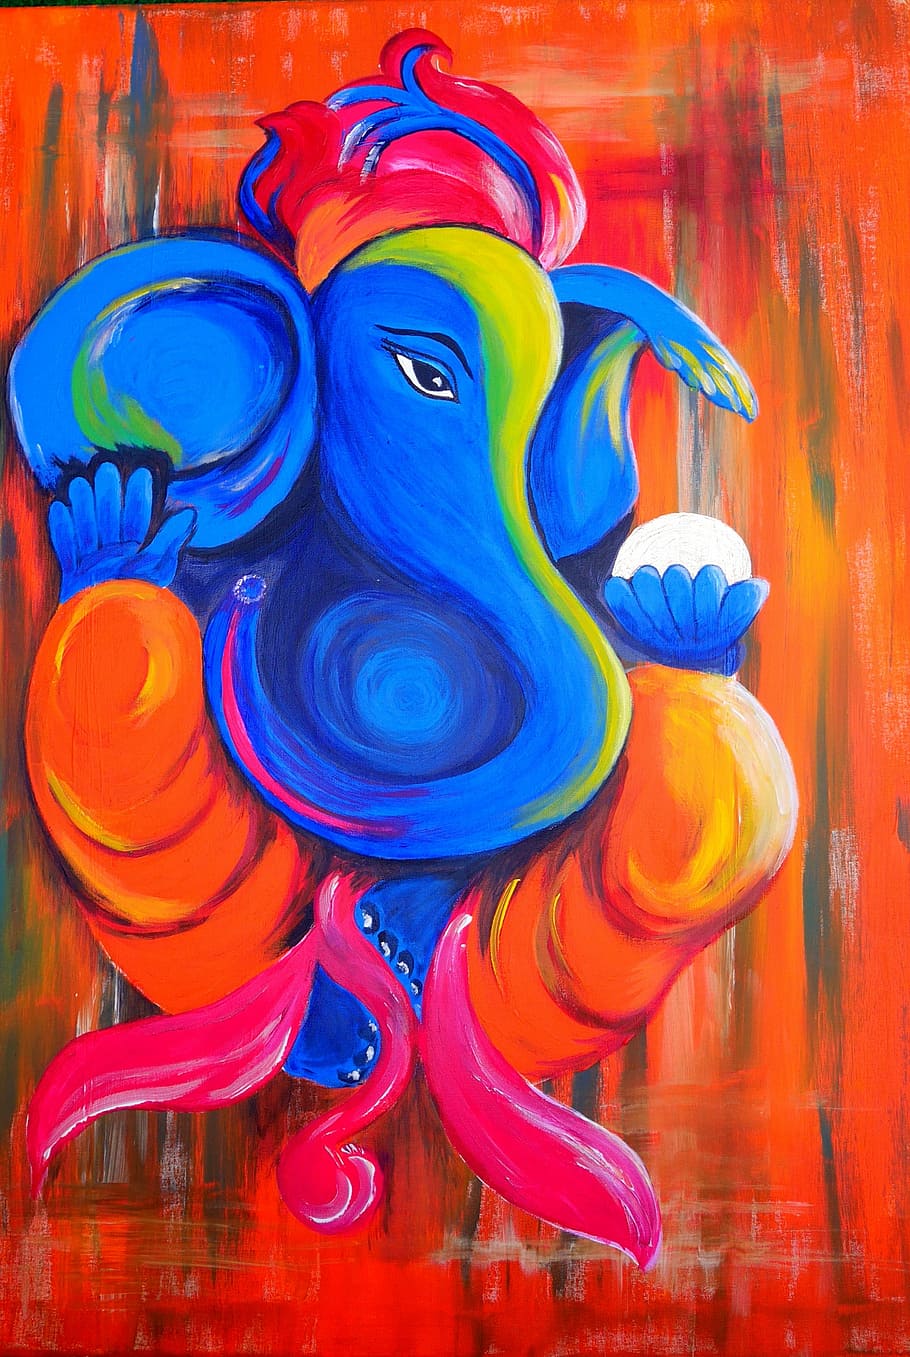 azul, amarillo, rojo, naranja, pintura de elefante, elefante, ganesha, dios, deidad, india